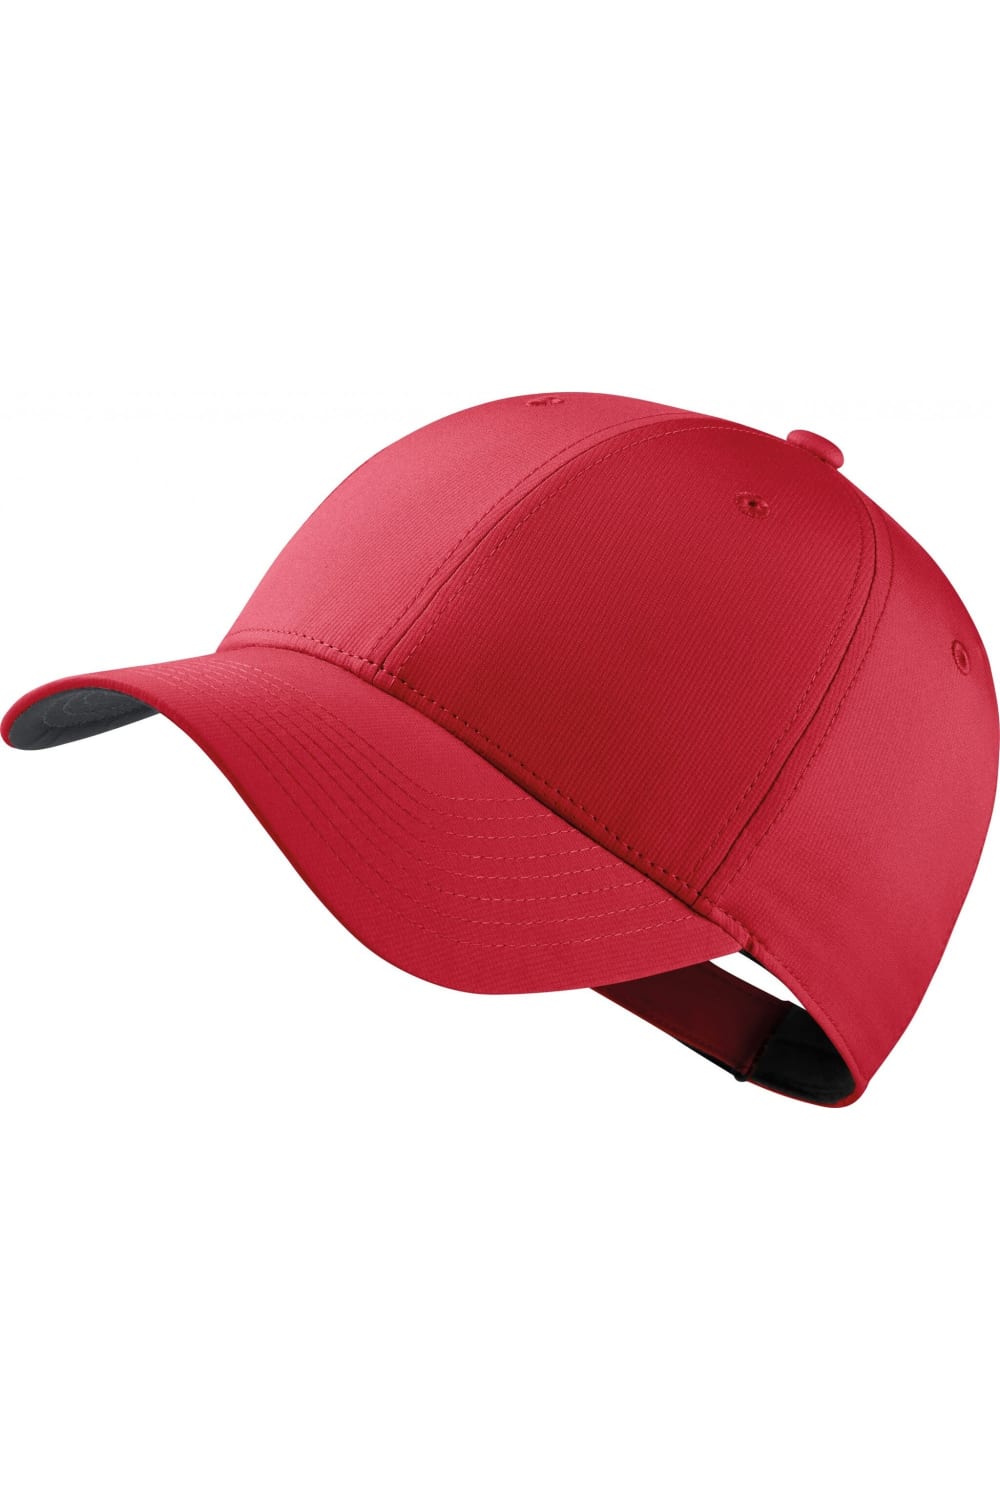 Nike Tech Cap (University Red/Anthracite/Black)